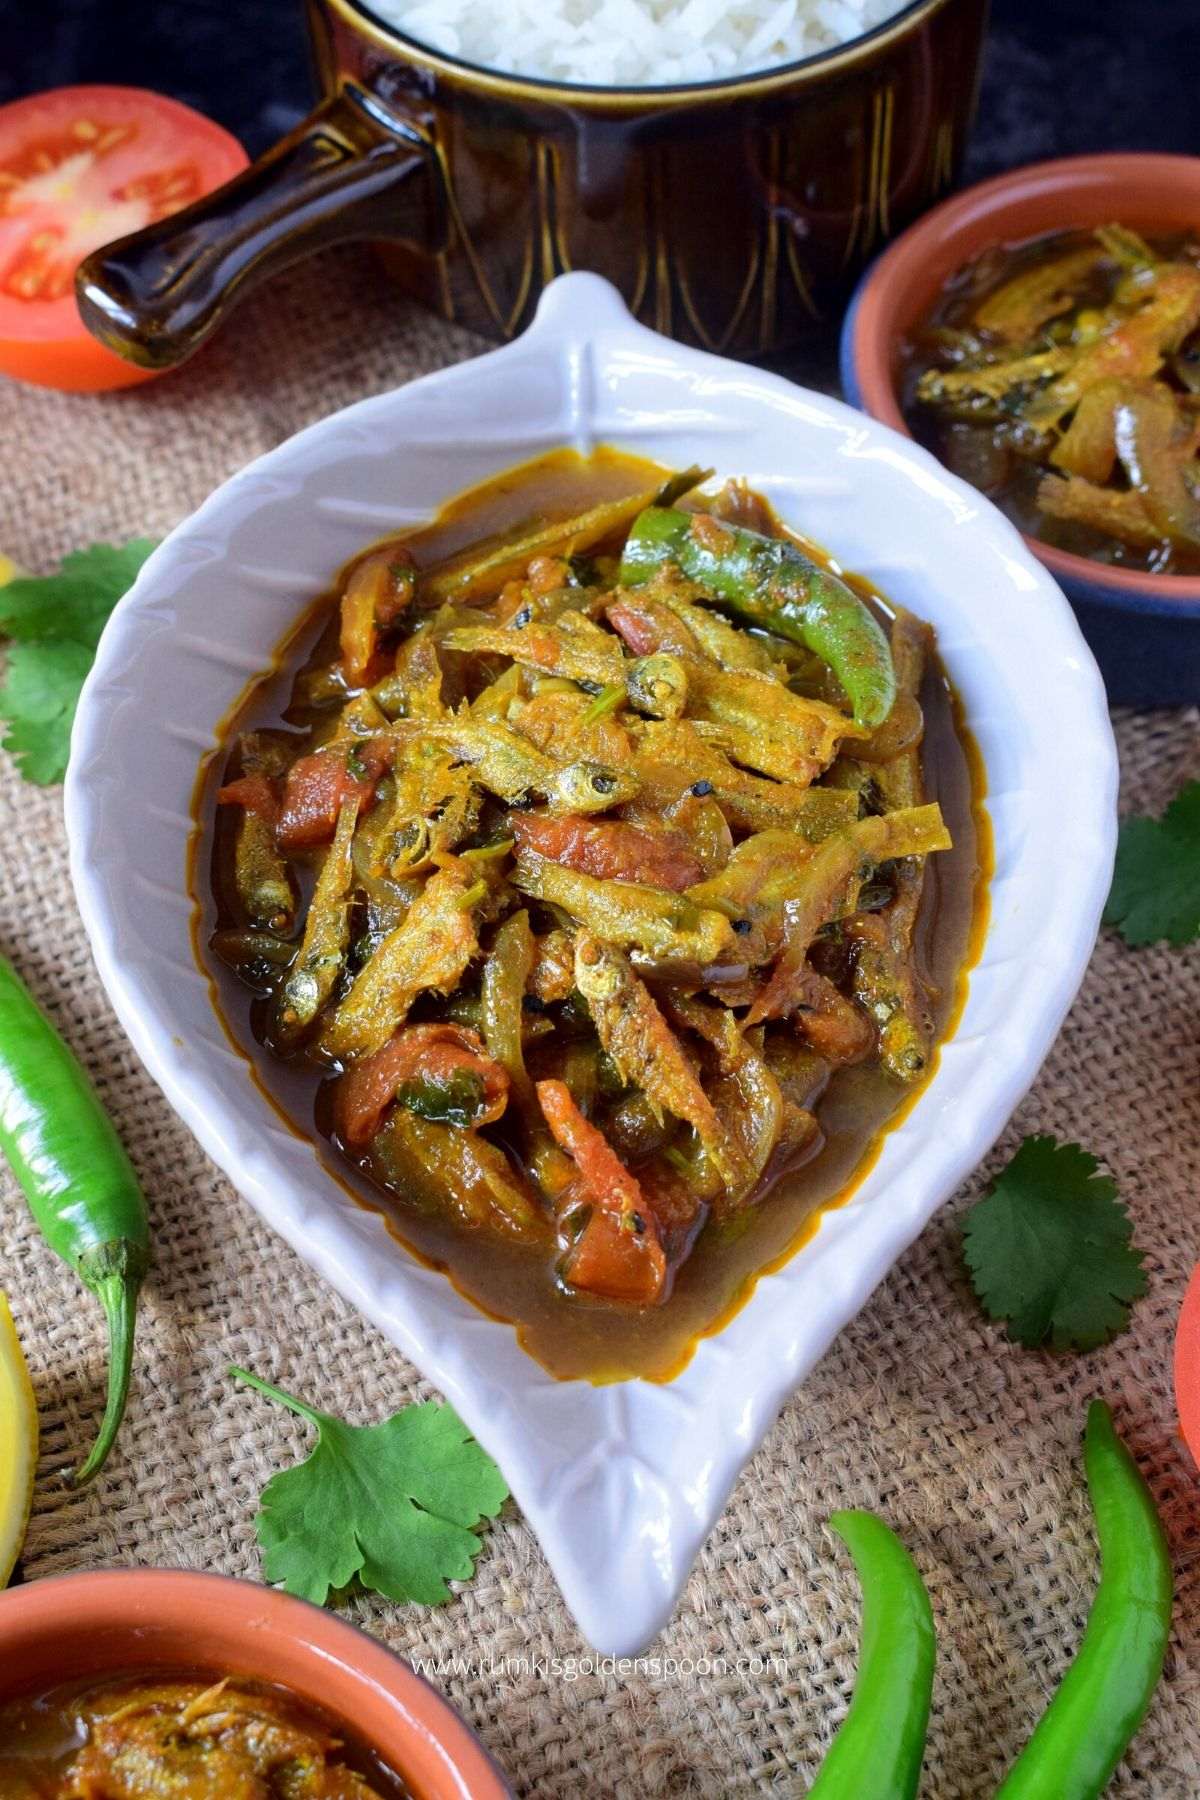 mourala macher jhal, mourala fish curry, mourala macher recipe, morola macher recipe, mourola macher recipe, mourola macher bati chorchori, mourala chorchori, recipe for small fish, choti machli ki gravy, small fish curry, small fish curry recipe, how to make small fish curry, Bengali style fish curry, Bengali style fish curry recipe, recipe for fish curry Bengali style, recipe of fish curry Bengali style, fish curry recipe, fish curries, traditional bengali food, Bengali recipe fish, Bengali recipes fish, recipe for bengali fish curry, Bengali recipe for fish, Bengali recipe of fish, how to make mourala macher jhal, Rumki's Golden Spoon